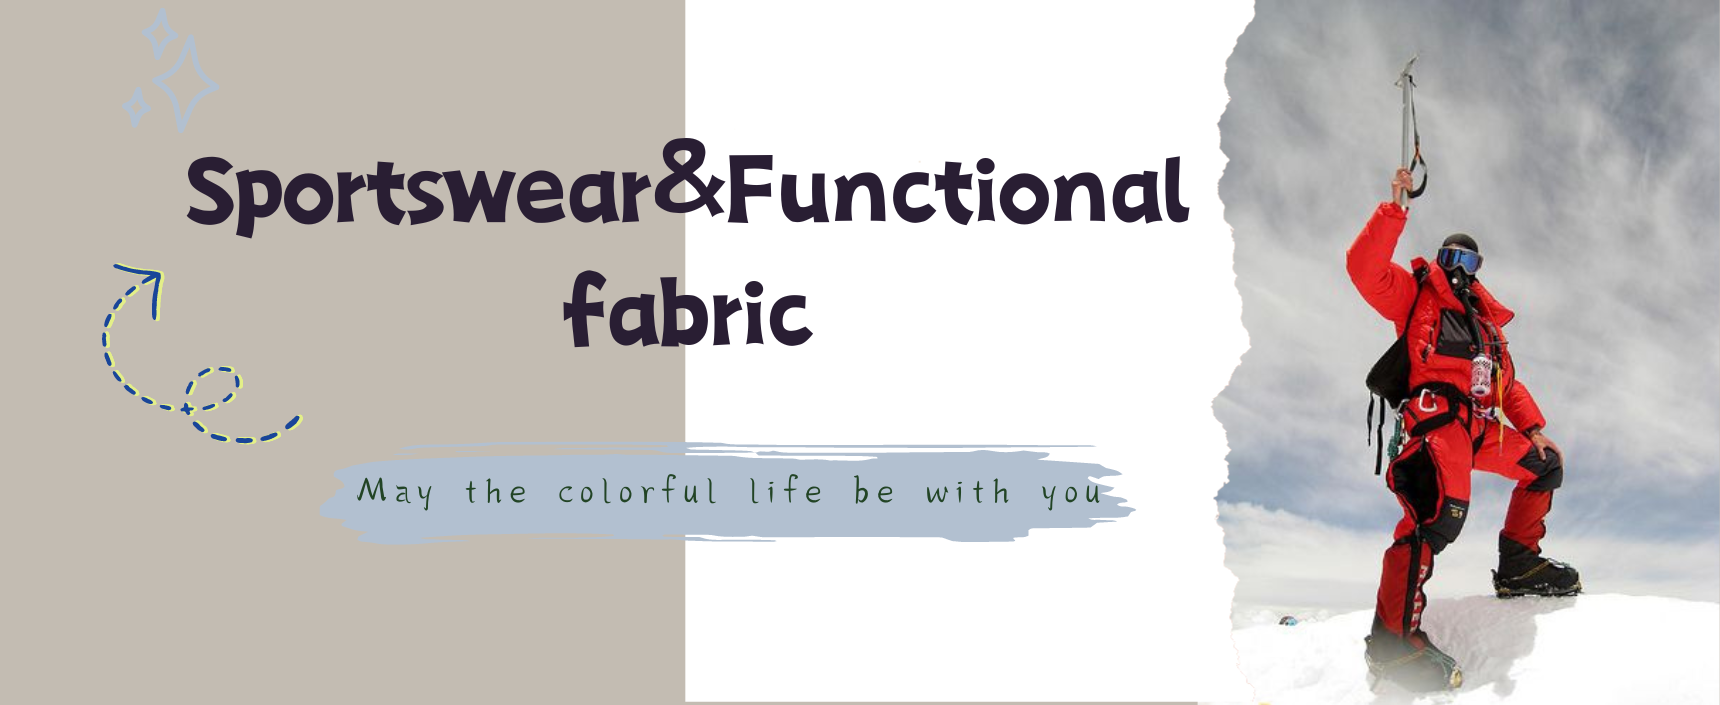 fashion fabric